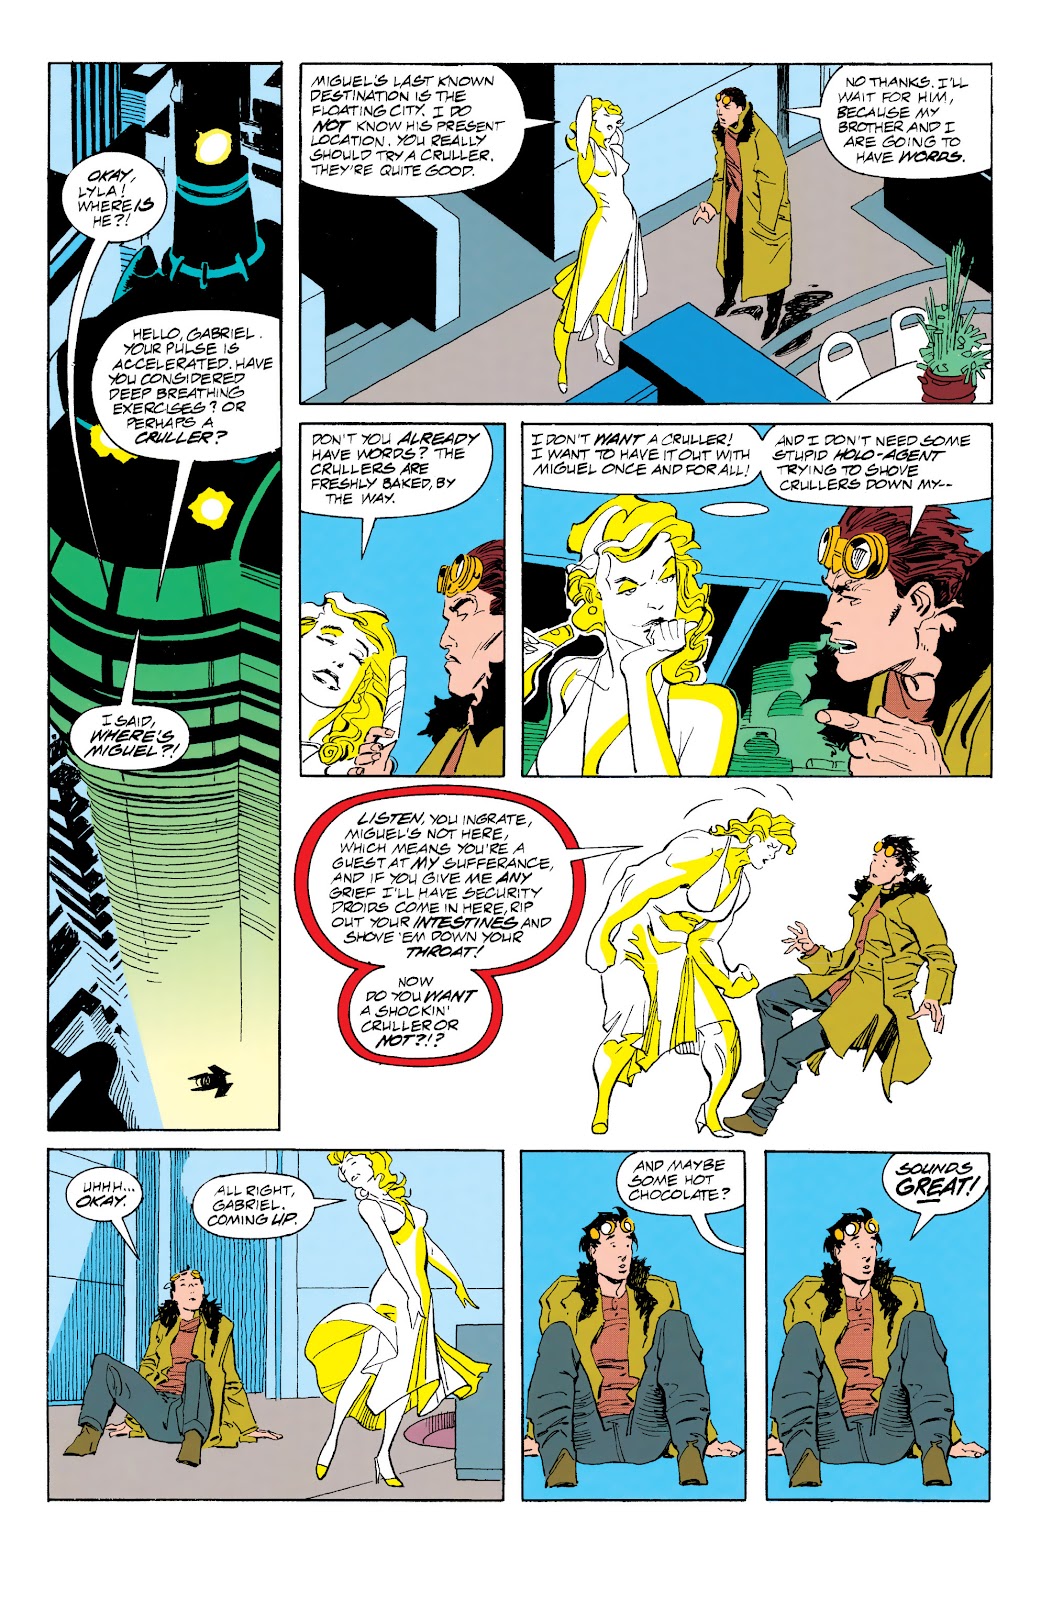 Spider-Man 2099 (1992) issue 16 - Page 20